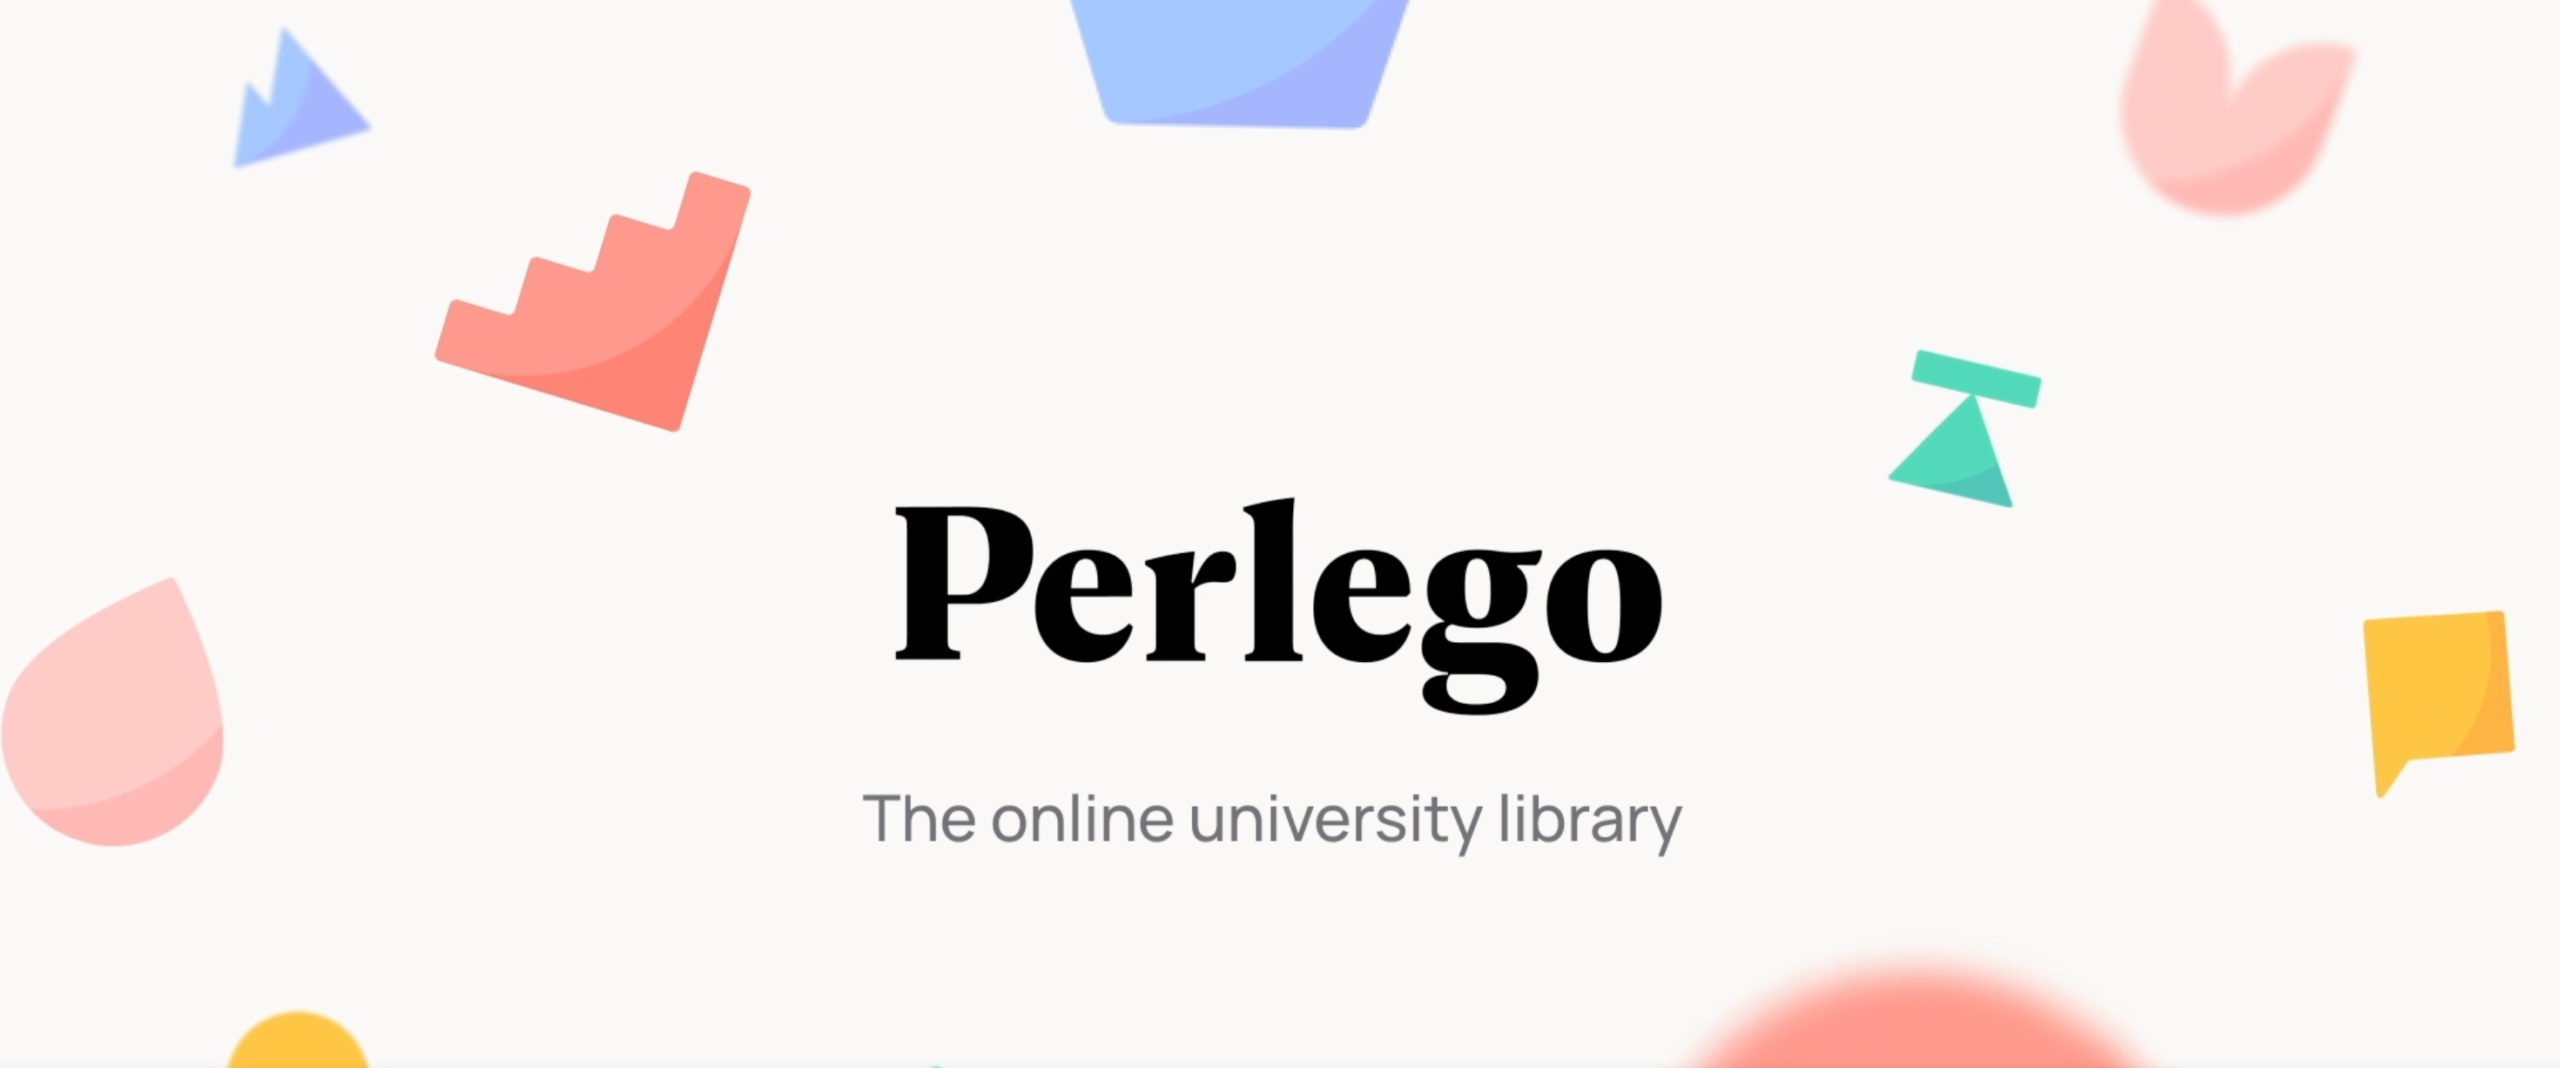 PERLEGO - ONLINE LIBRARY